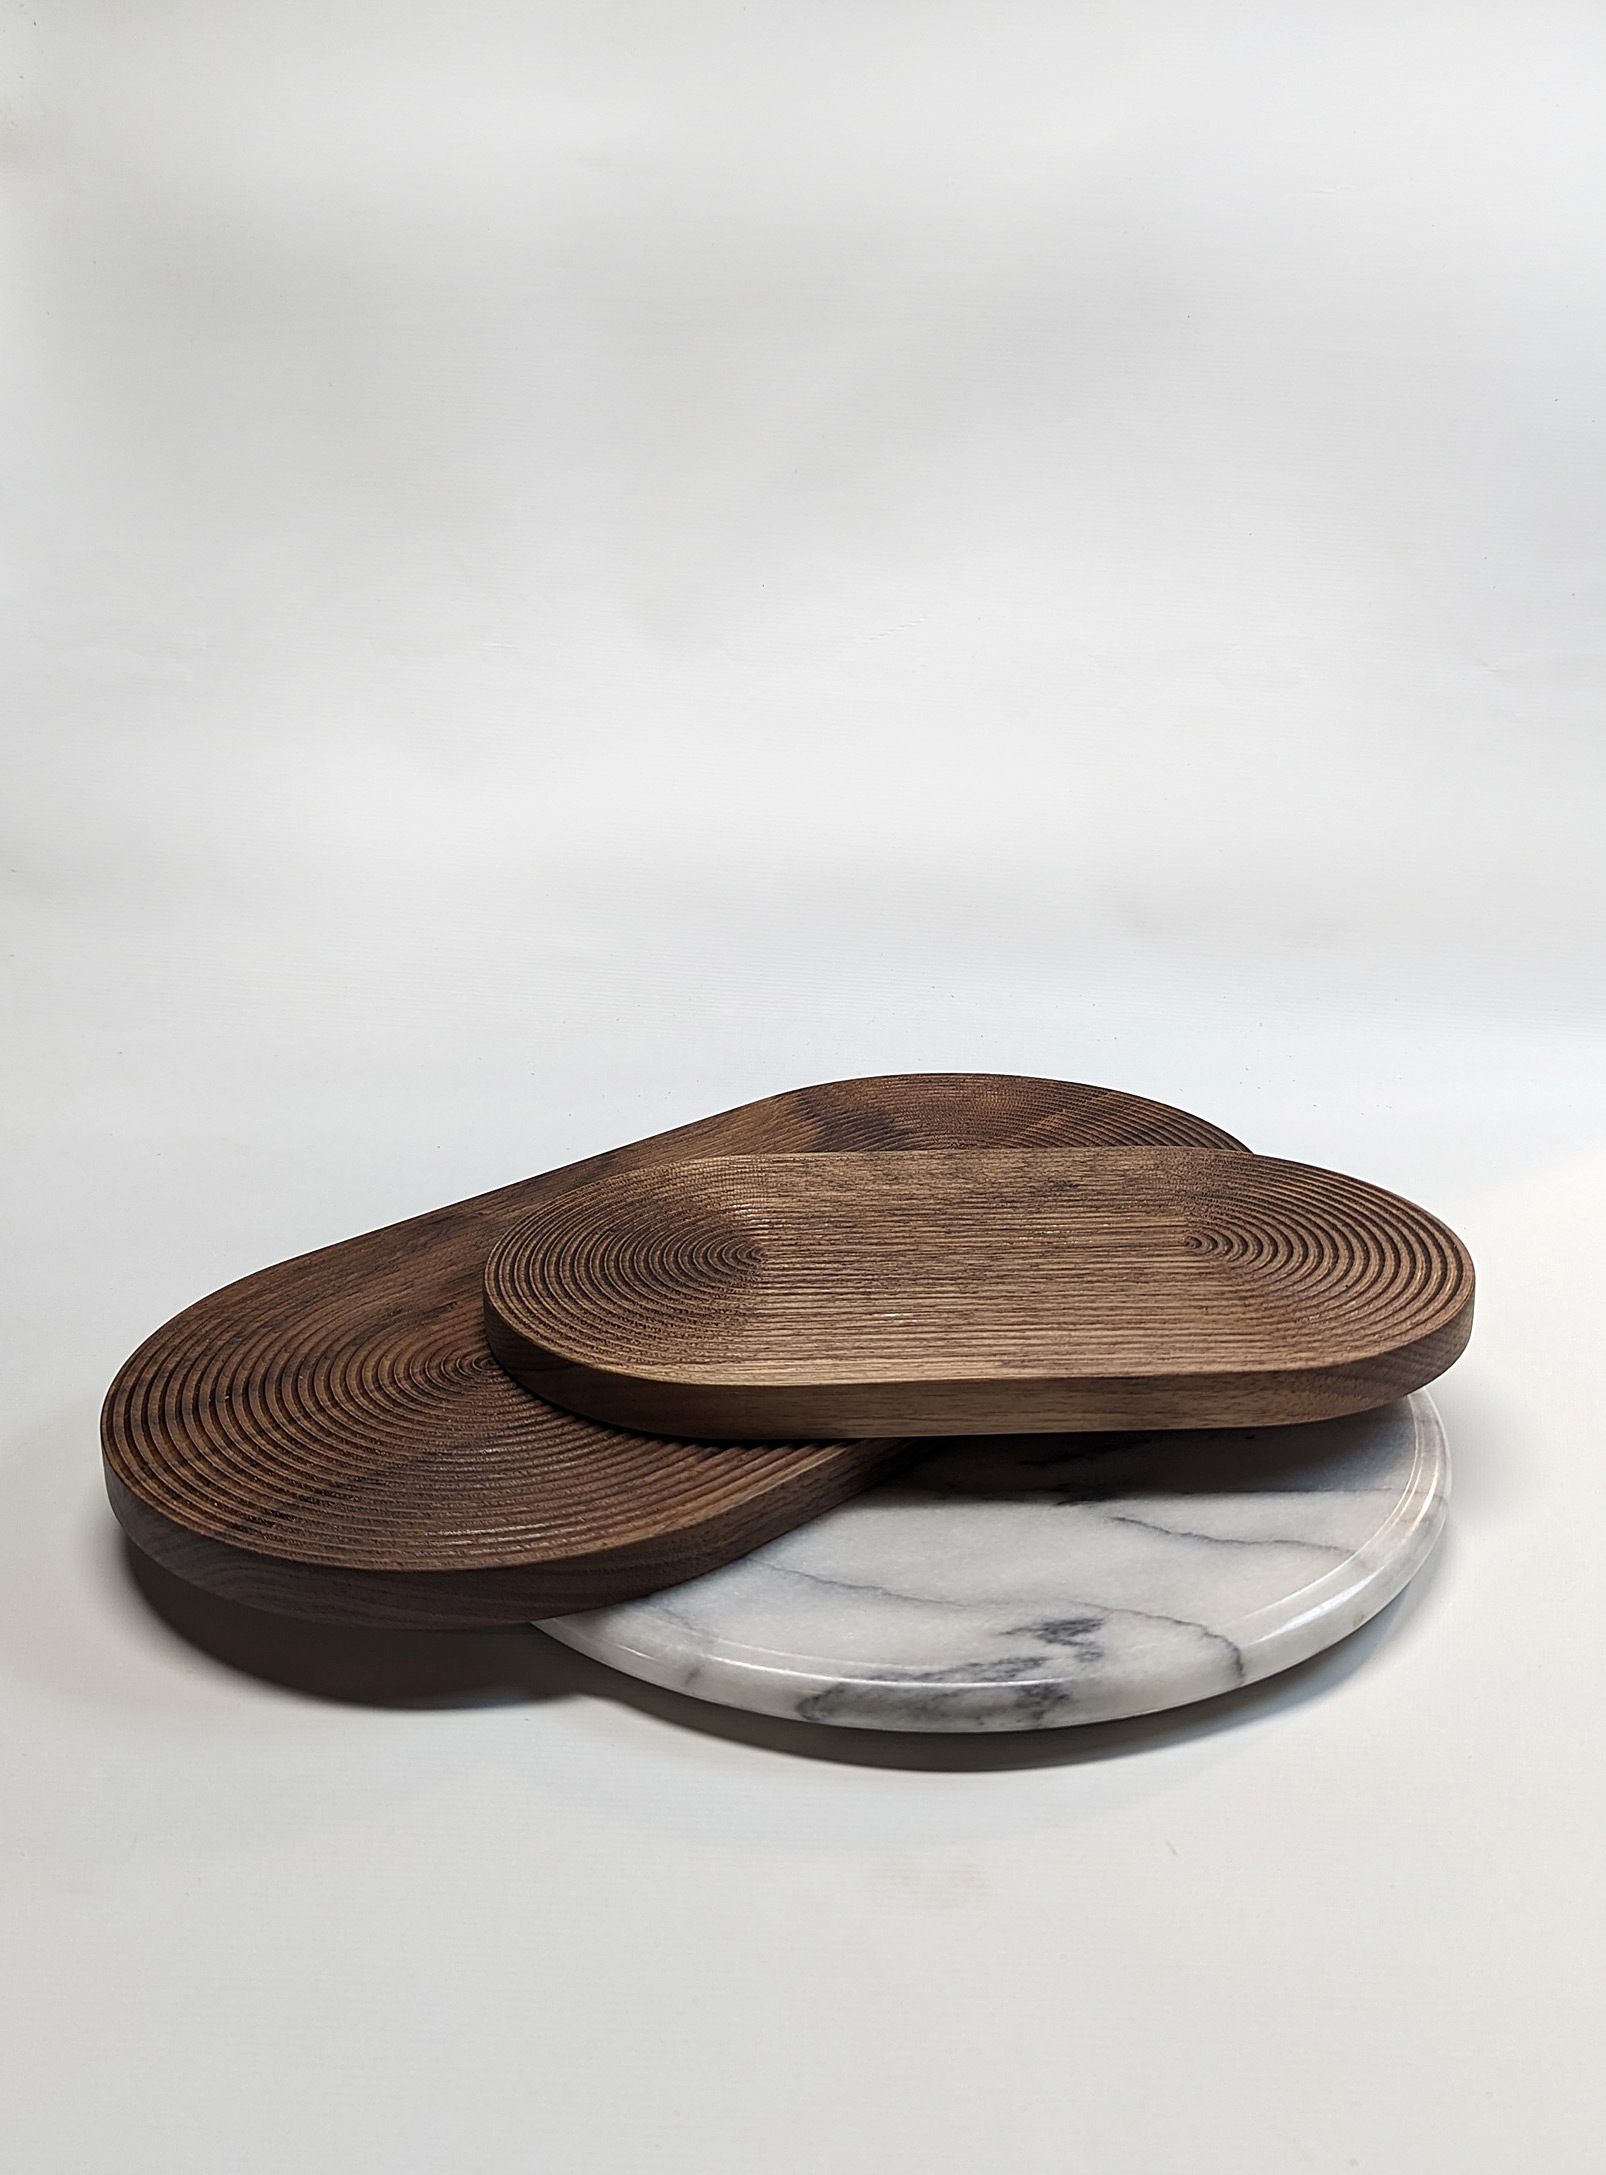 Rekindle - Oval oak tray See available sizes